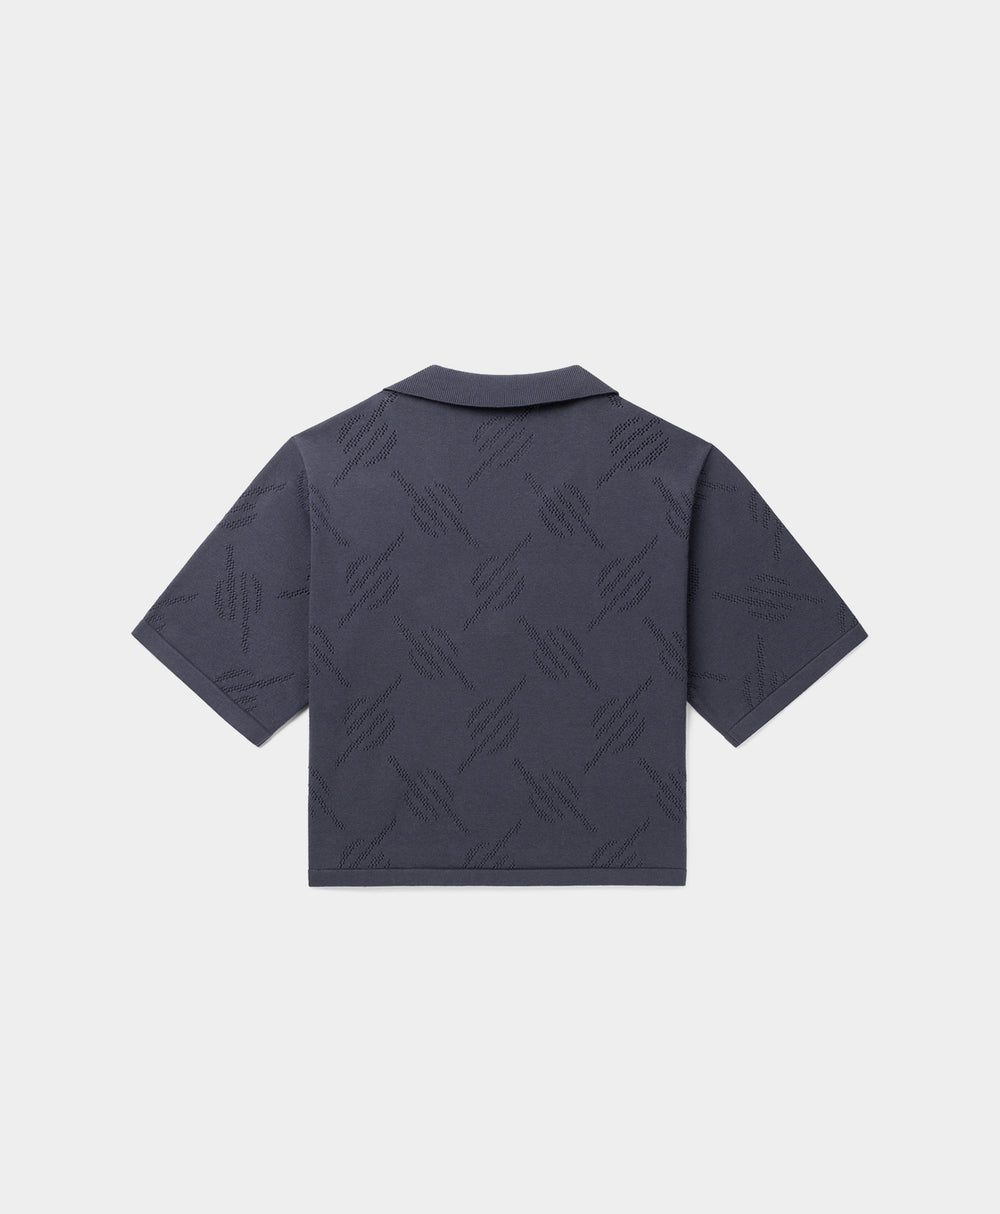 DP - Iron Grey Repatty Shirt - Packshot - Rear